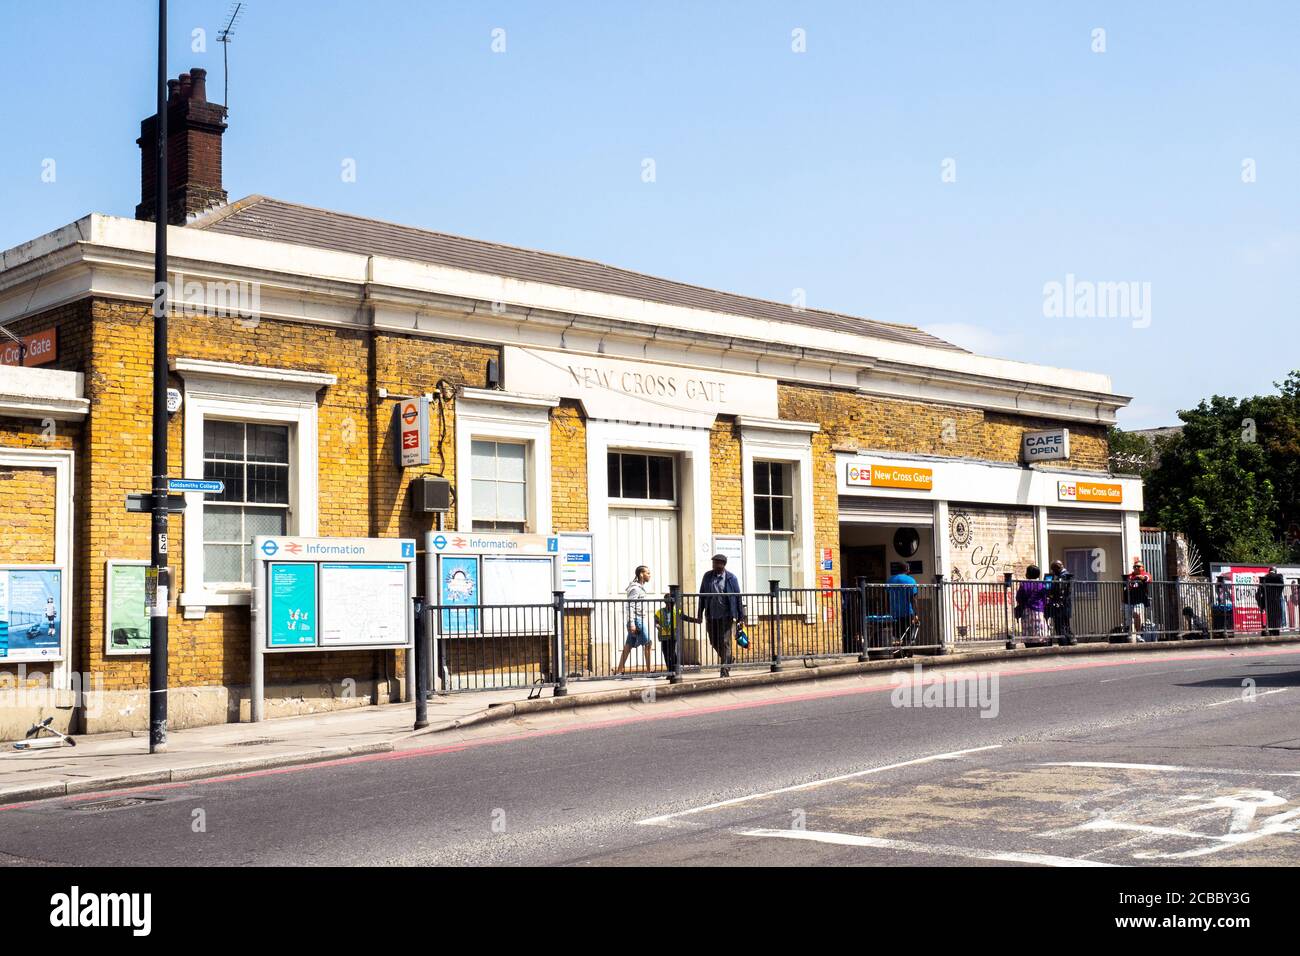 New Cross Gate Station - London, England Stock Photo